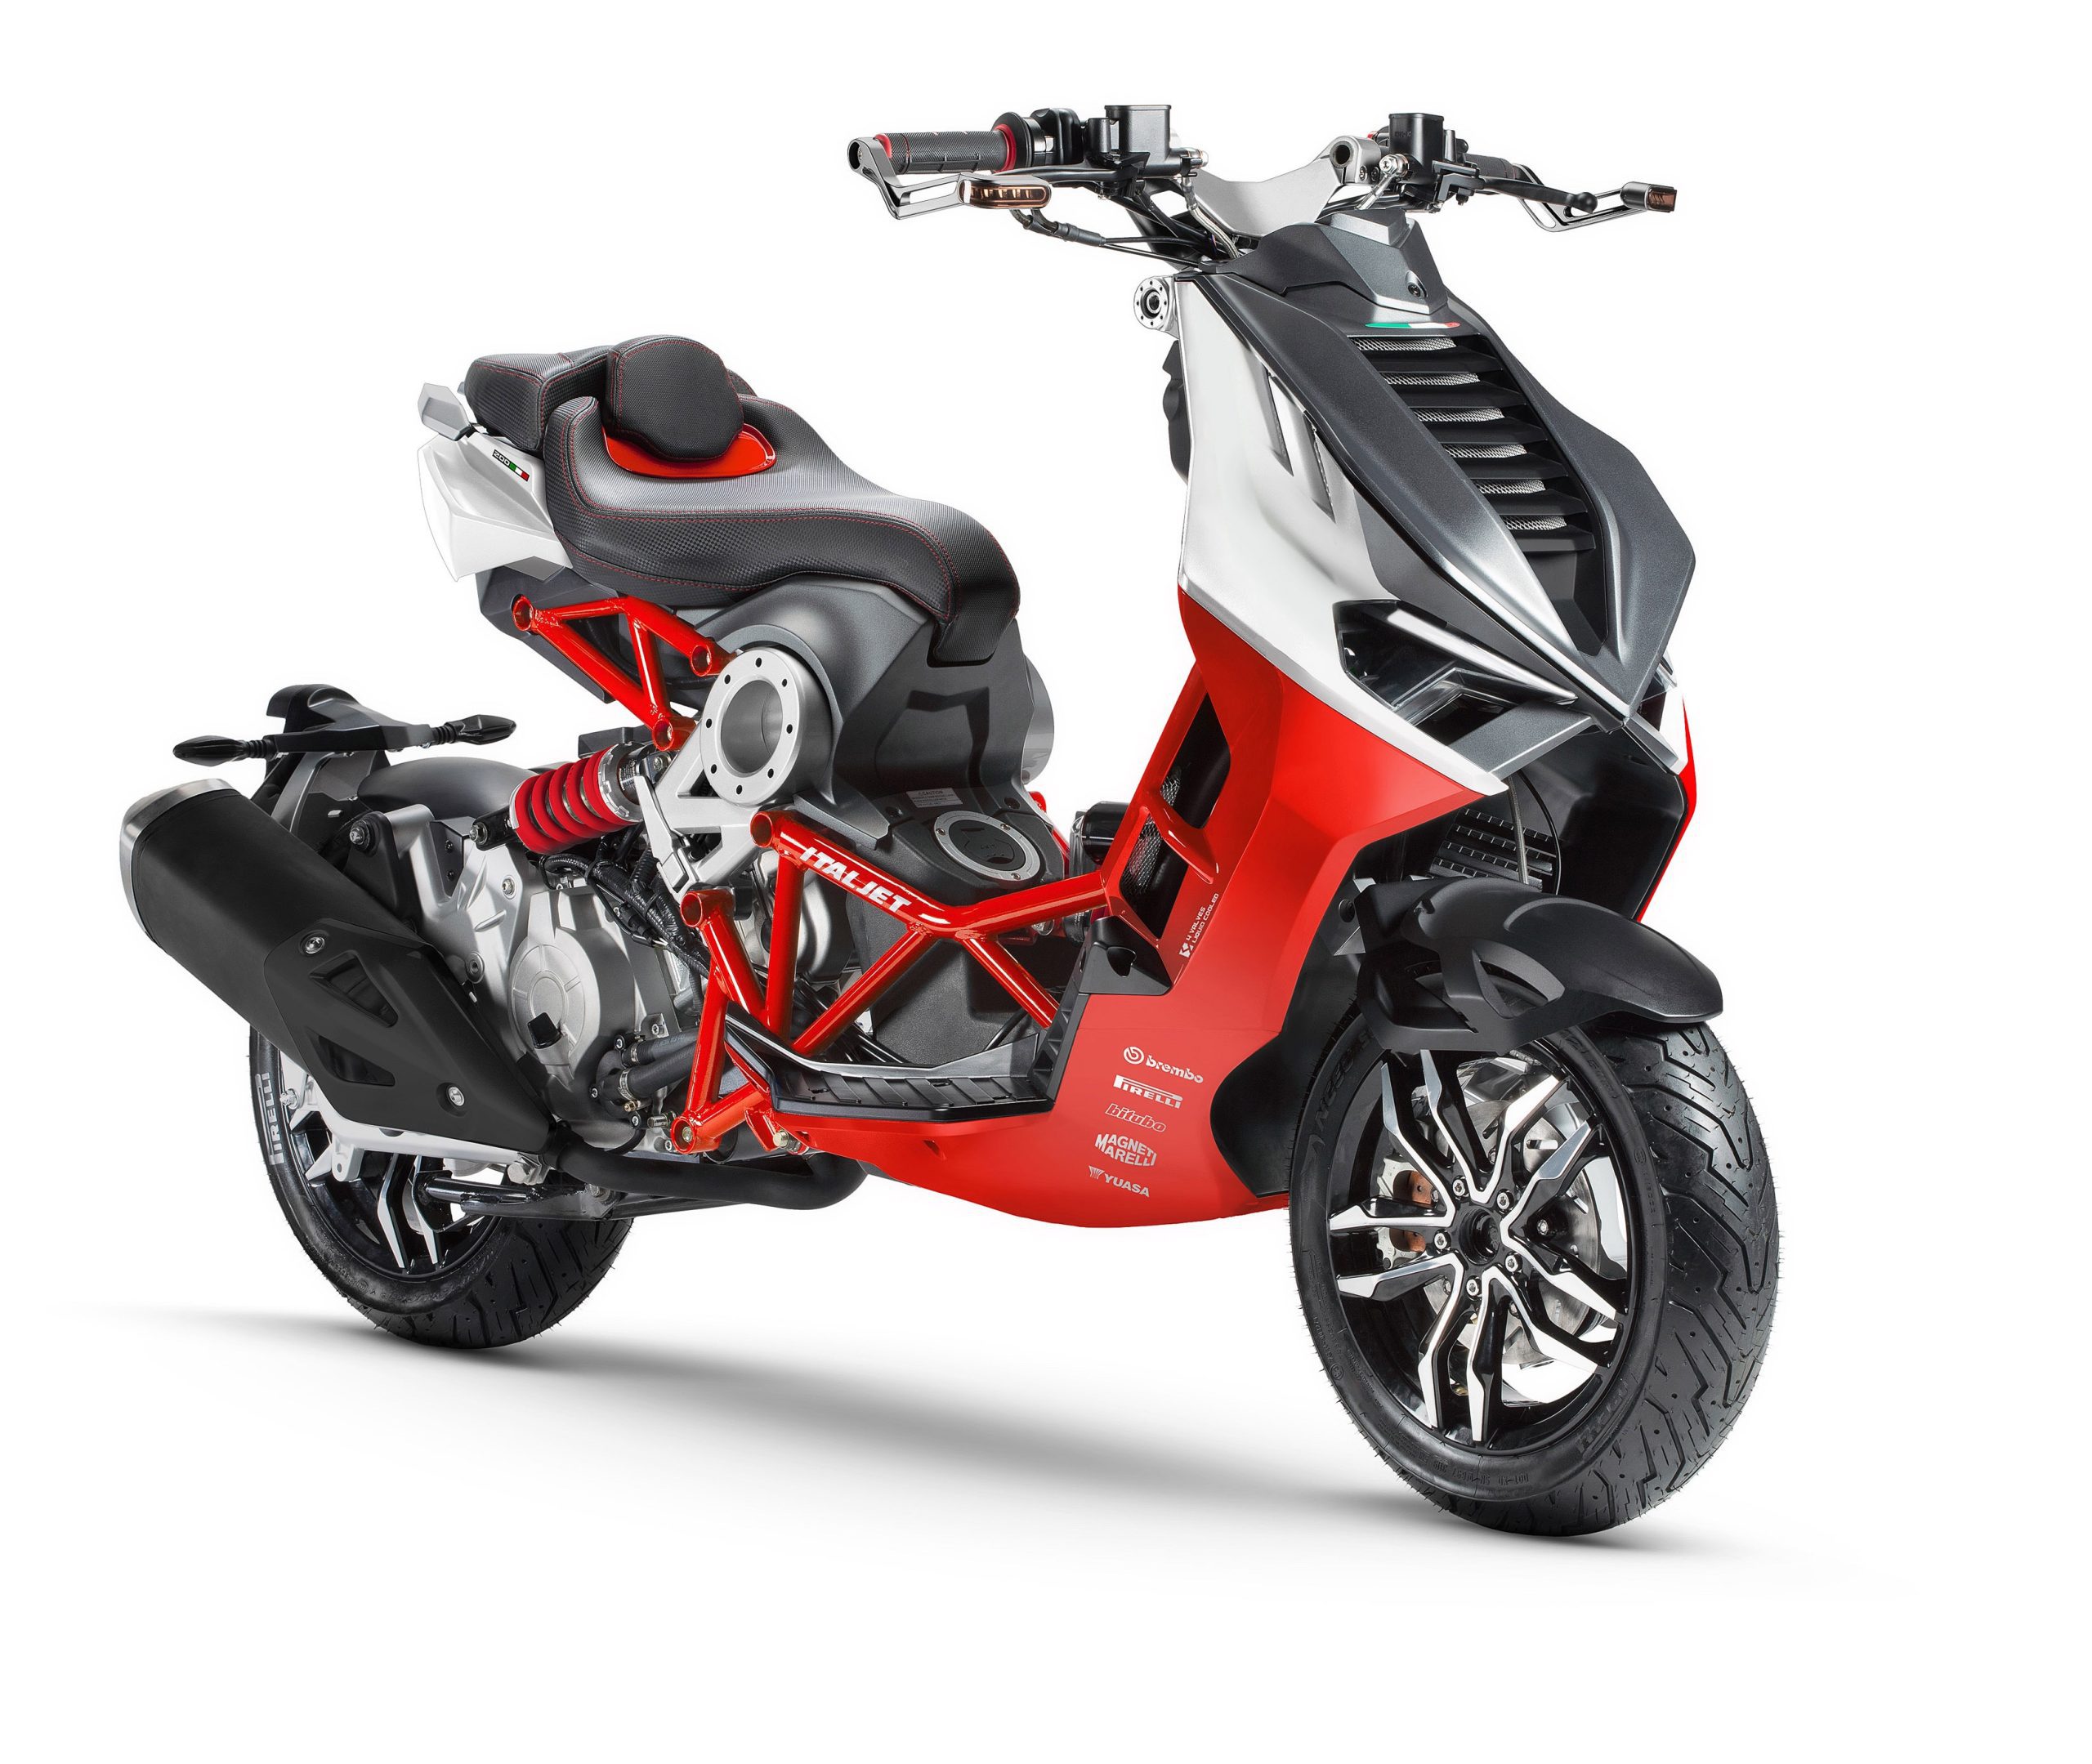 Italjet scooter has Ducati design